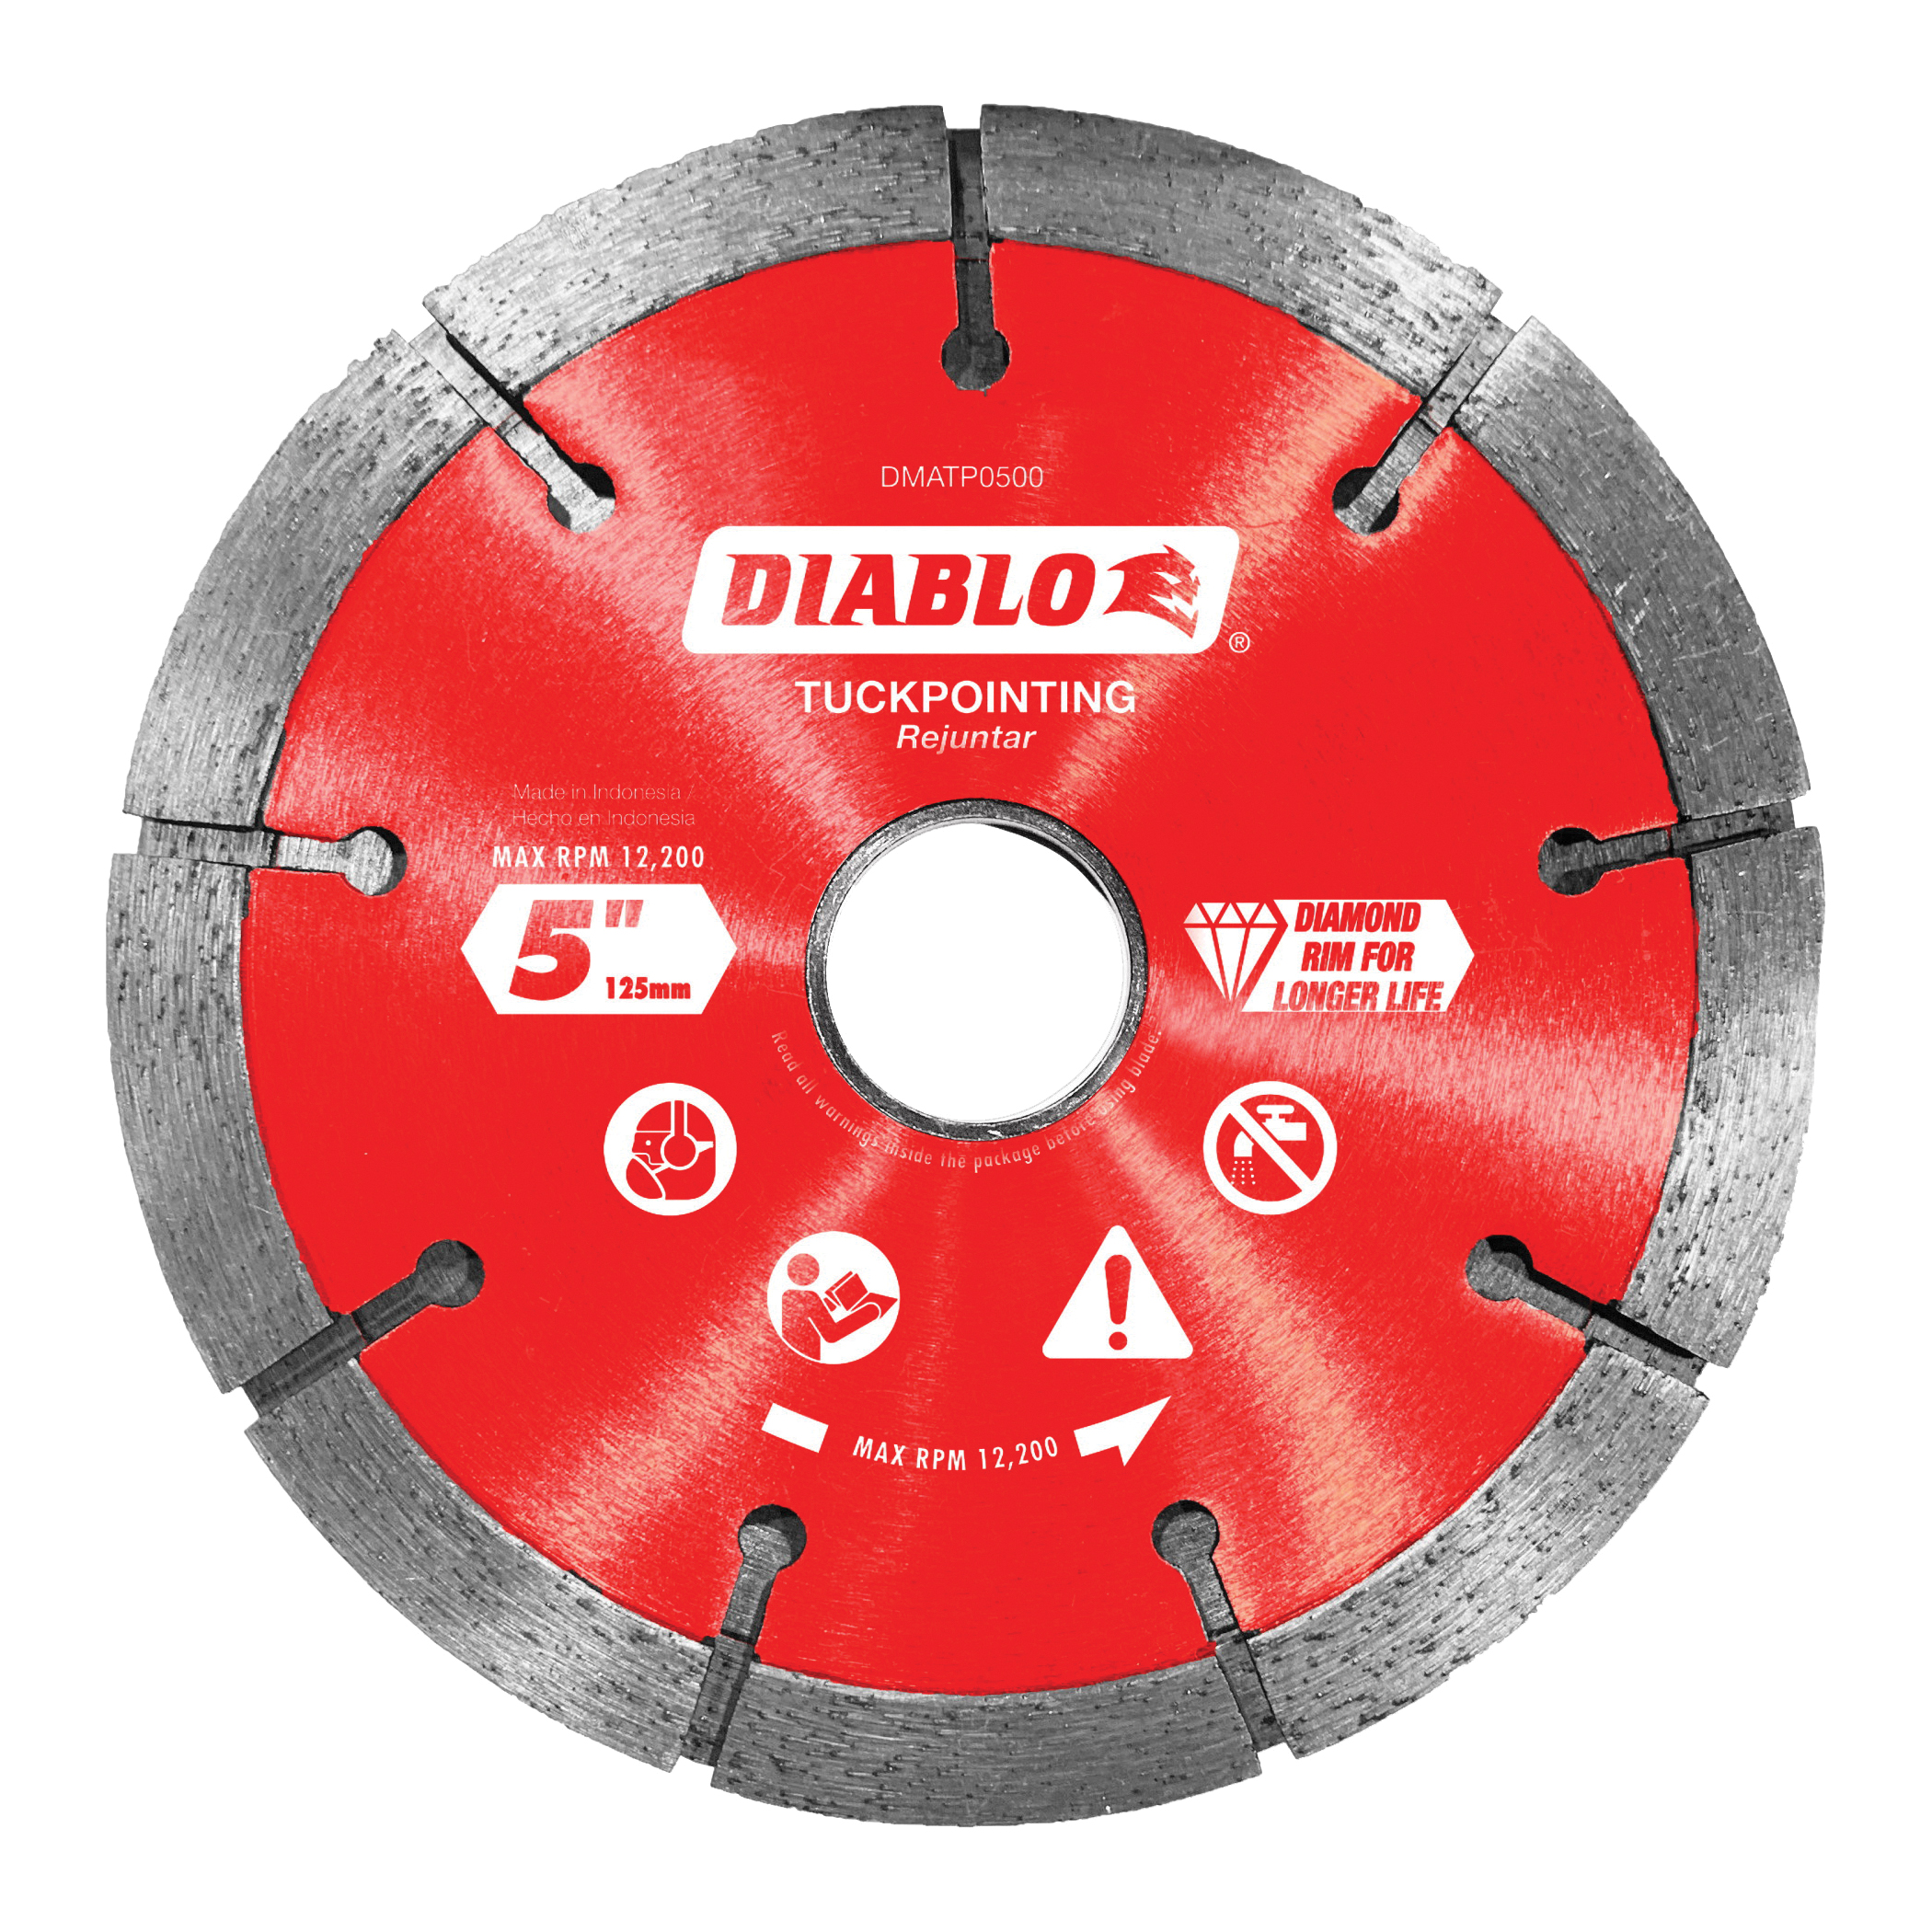 Diablo DMATP0500